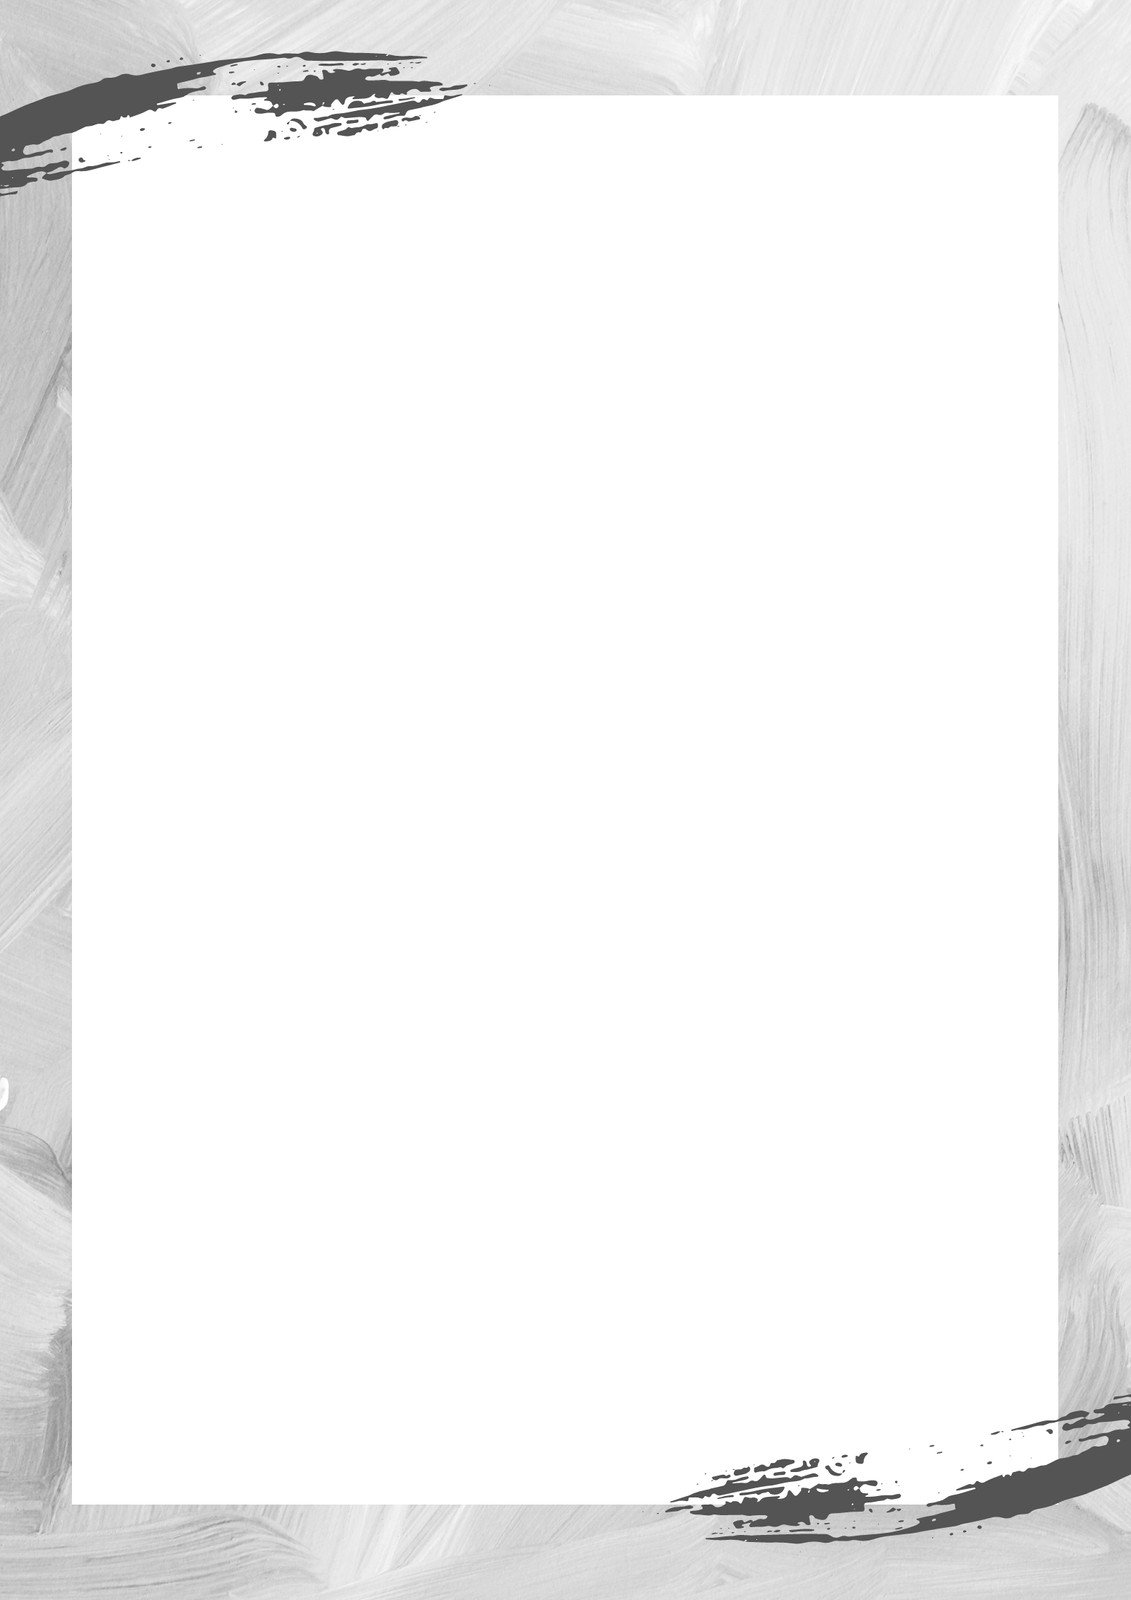 https://marketplace.canva.com/EAFYtiMjKbg/2/0/1131w/canva-grey-white-abstract-blank-a4-document-Koyip2xbGWo.jpg